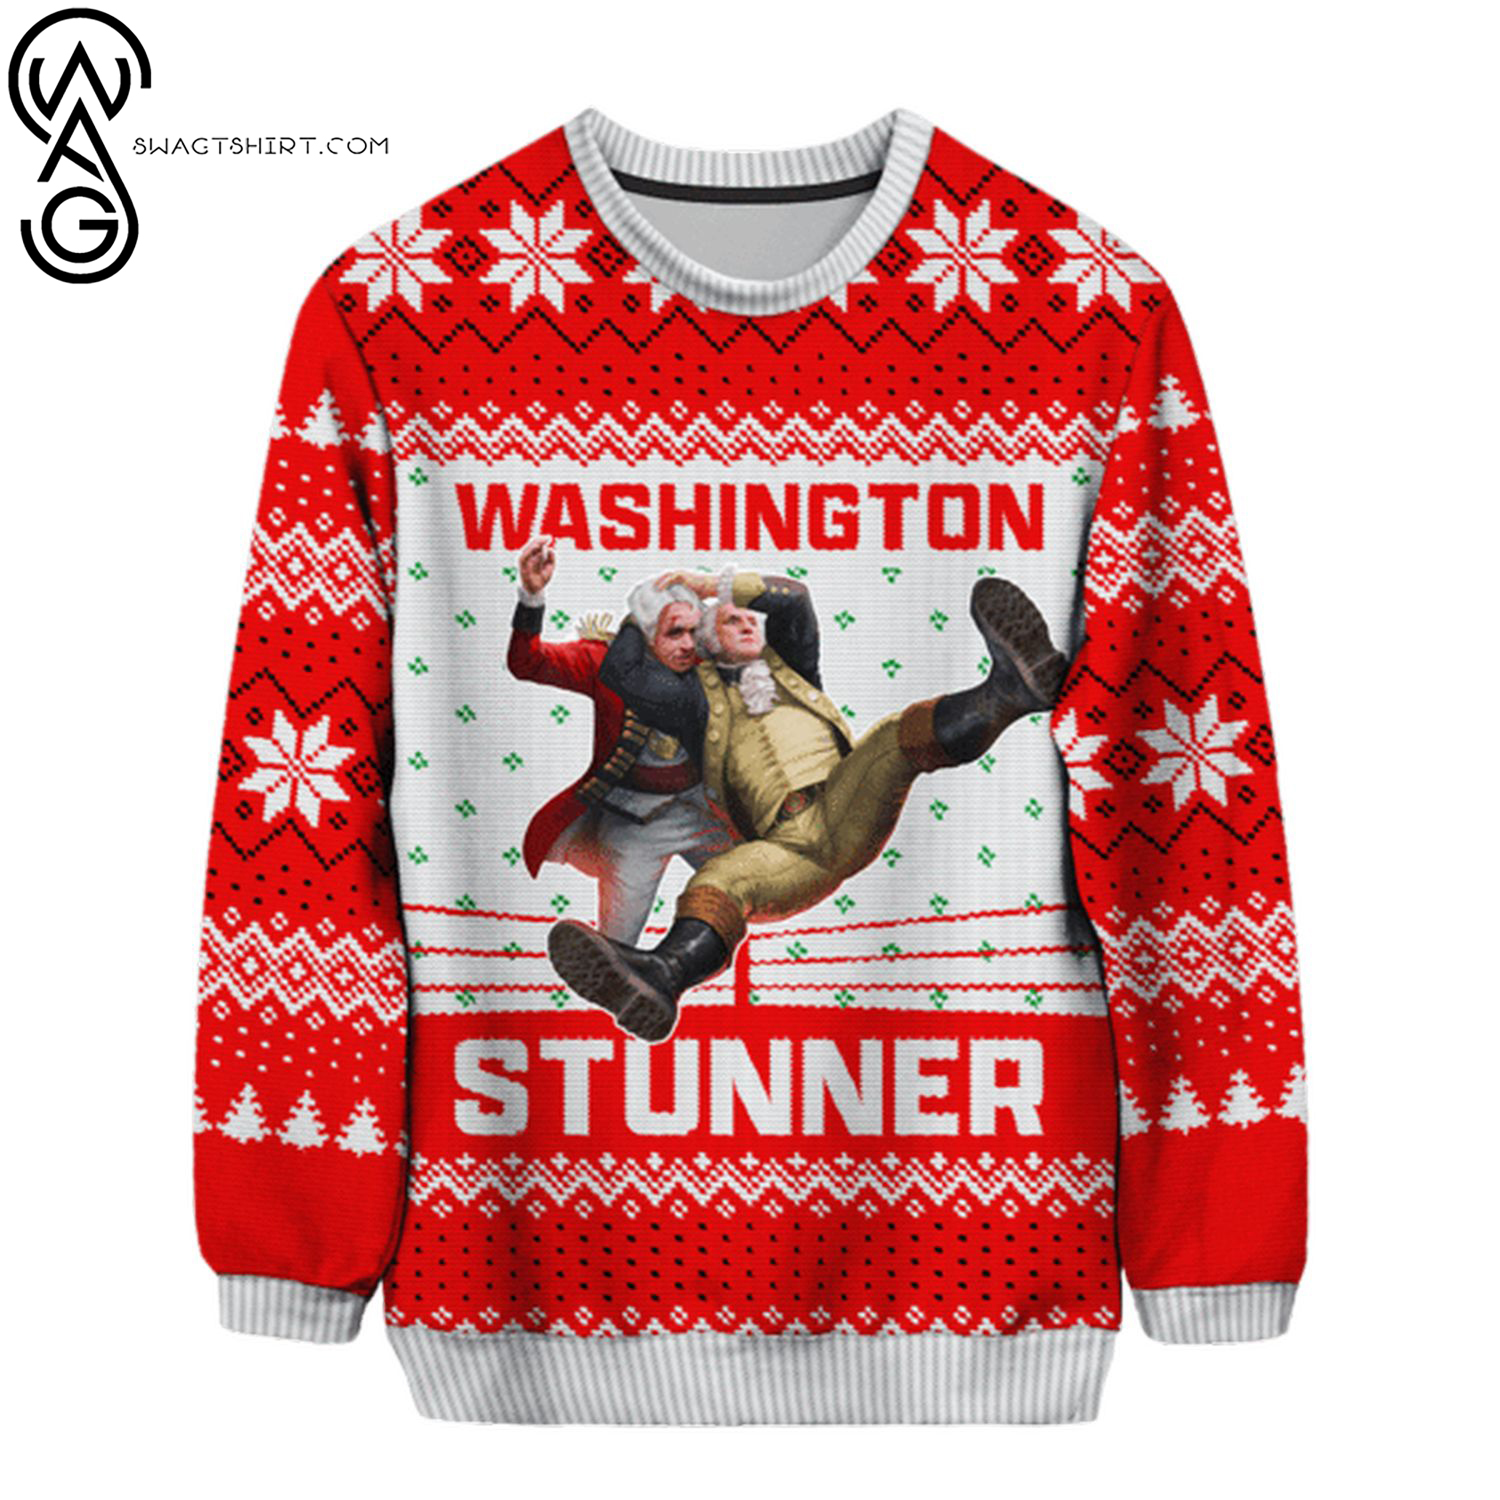 George washington stunner full printing ugly christmas sweater